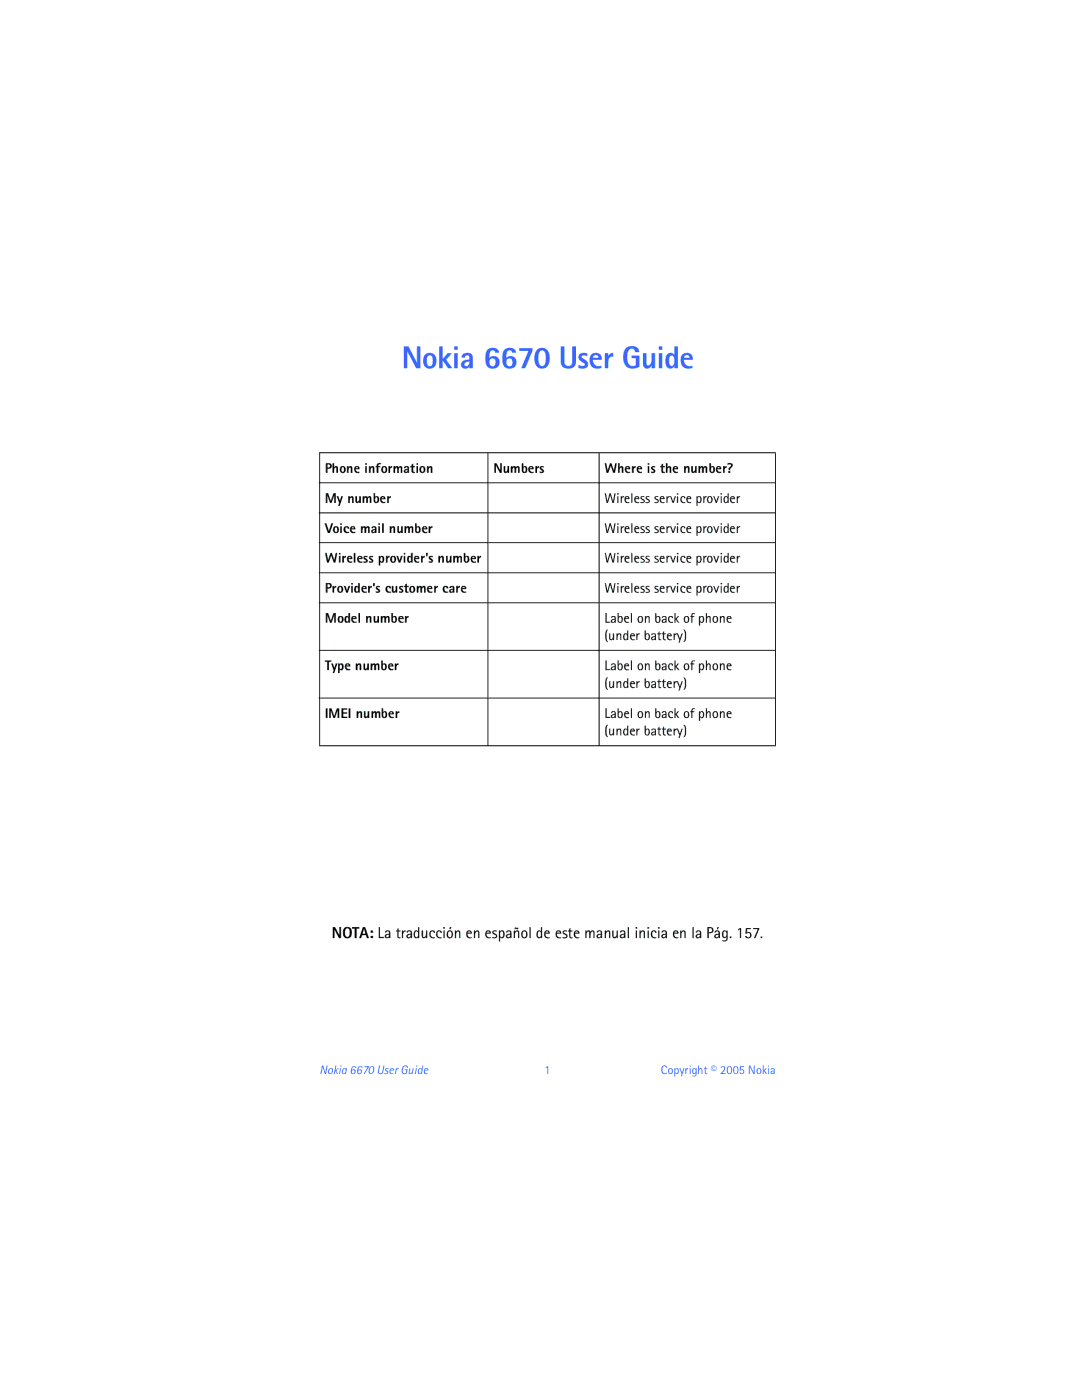 Nokia manual Nokia 6670 User Guide 